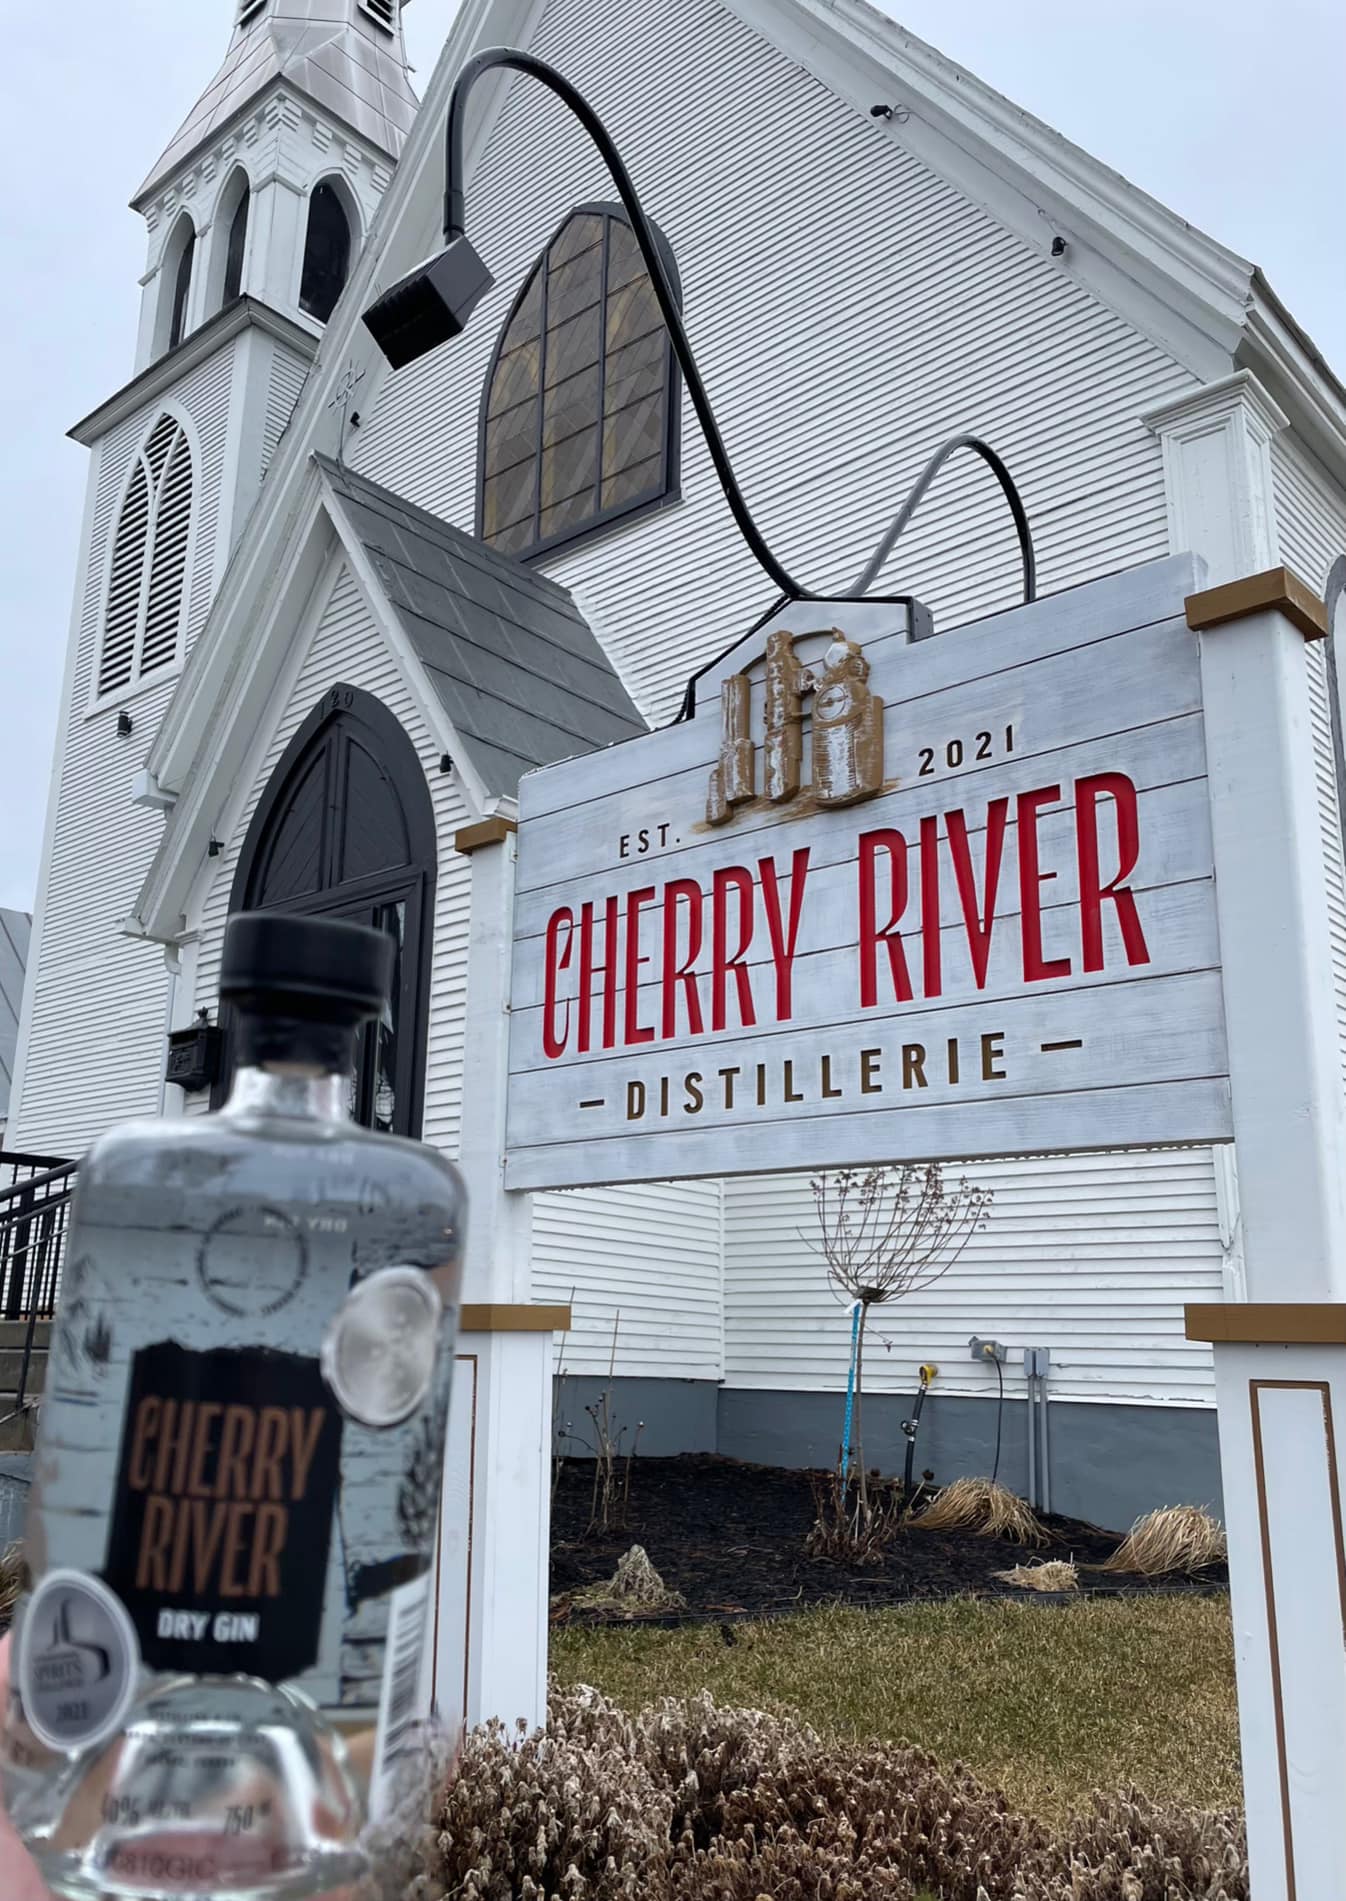 Cherry River Dry Gin